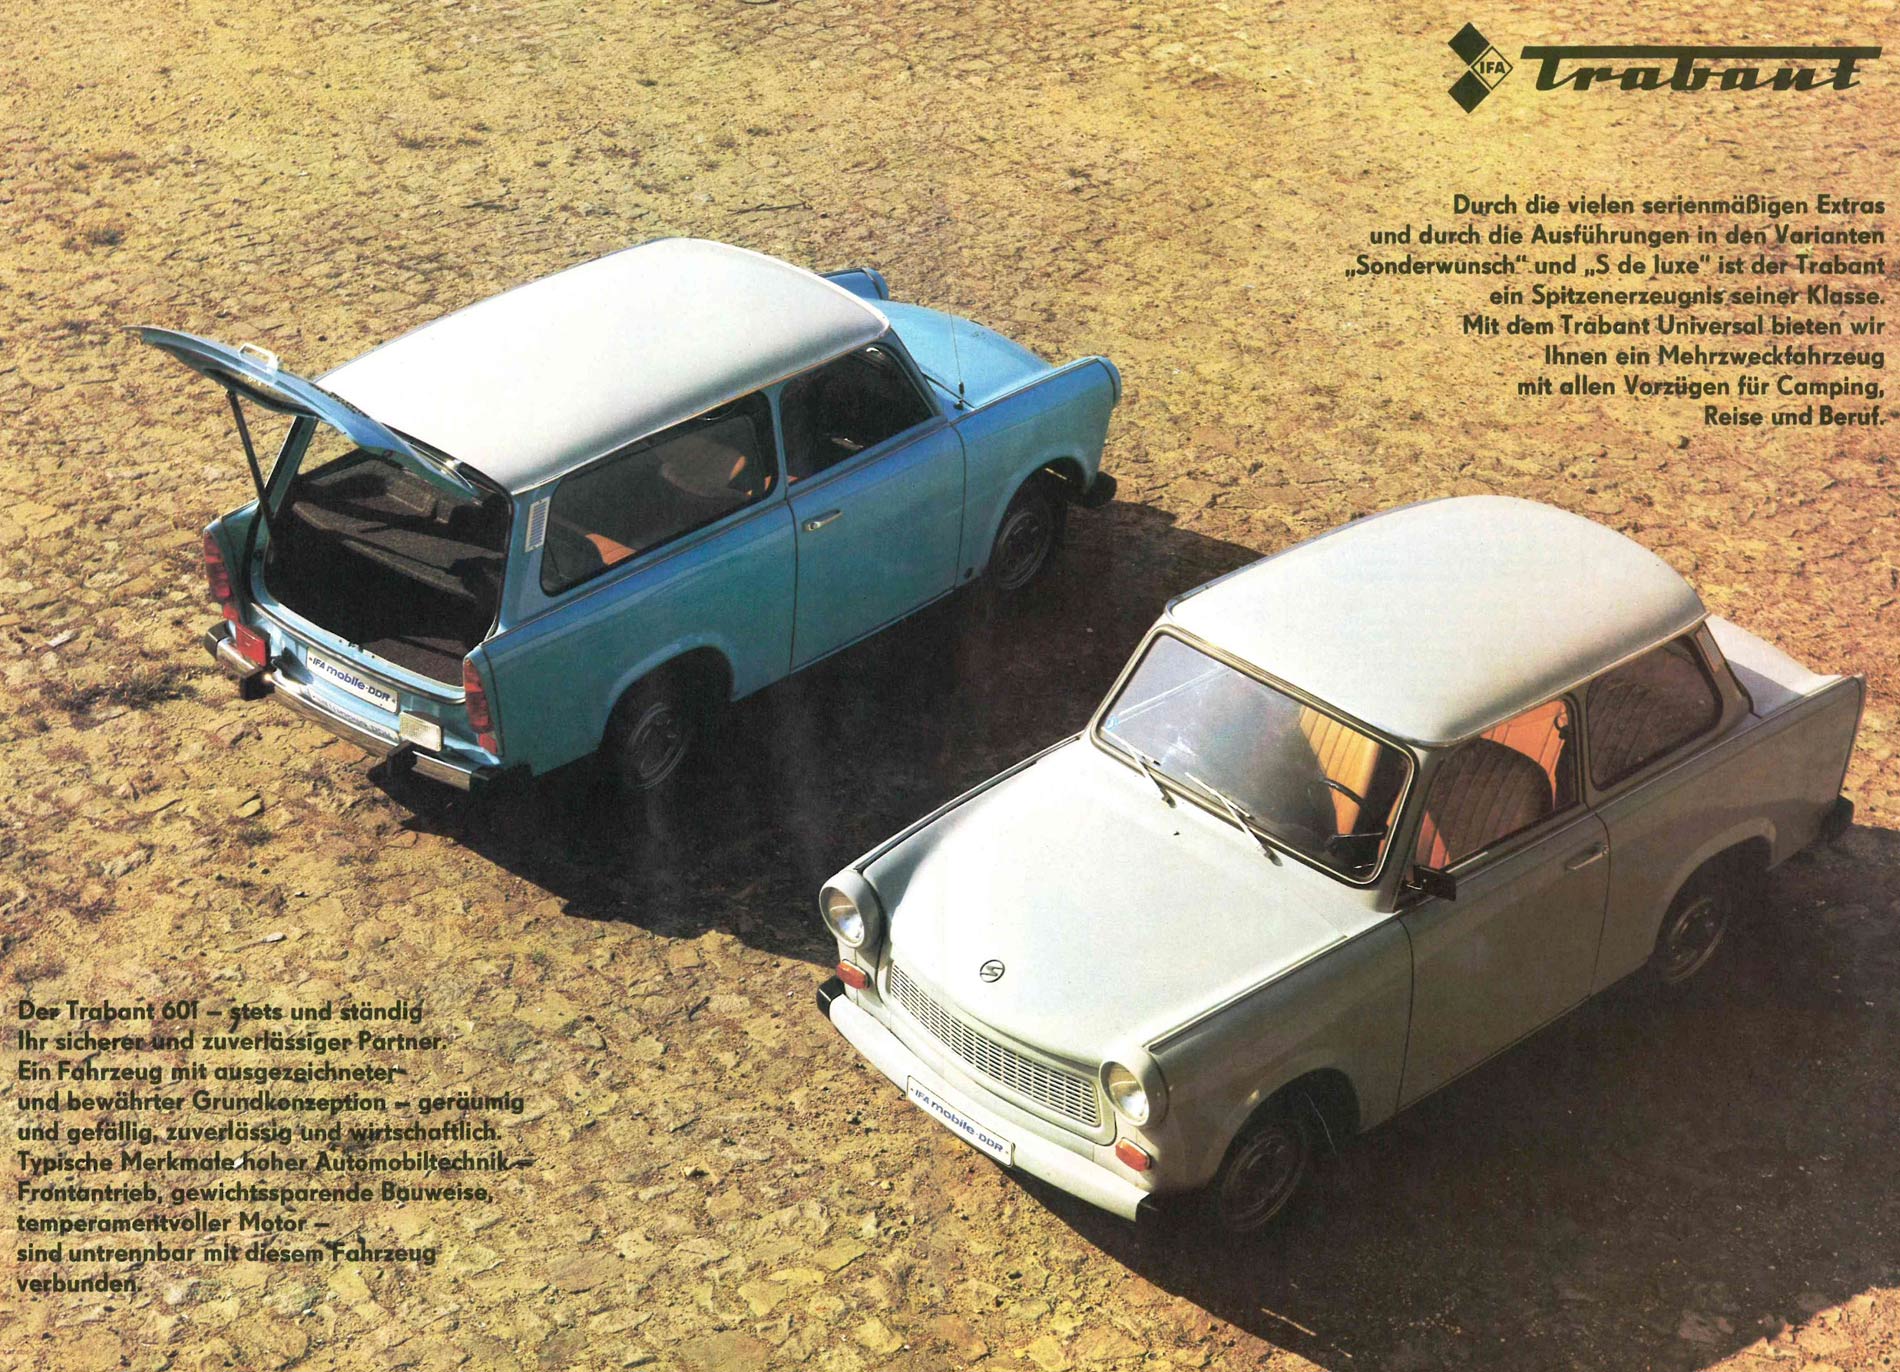 1980 - Trabant 601 - Seite 2/3